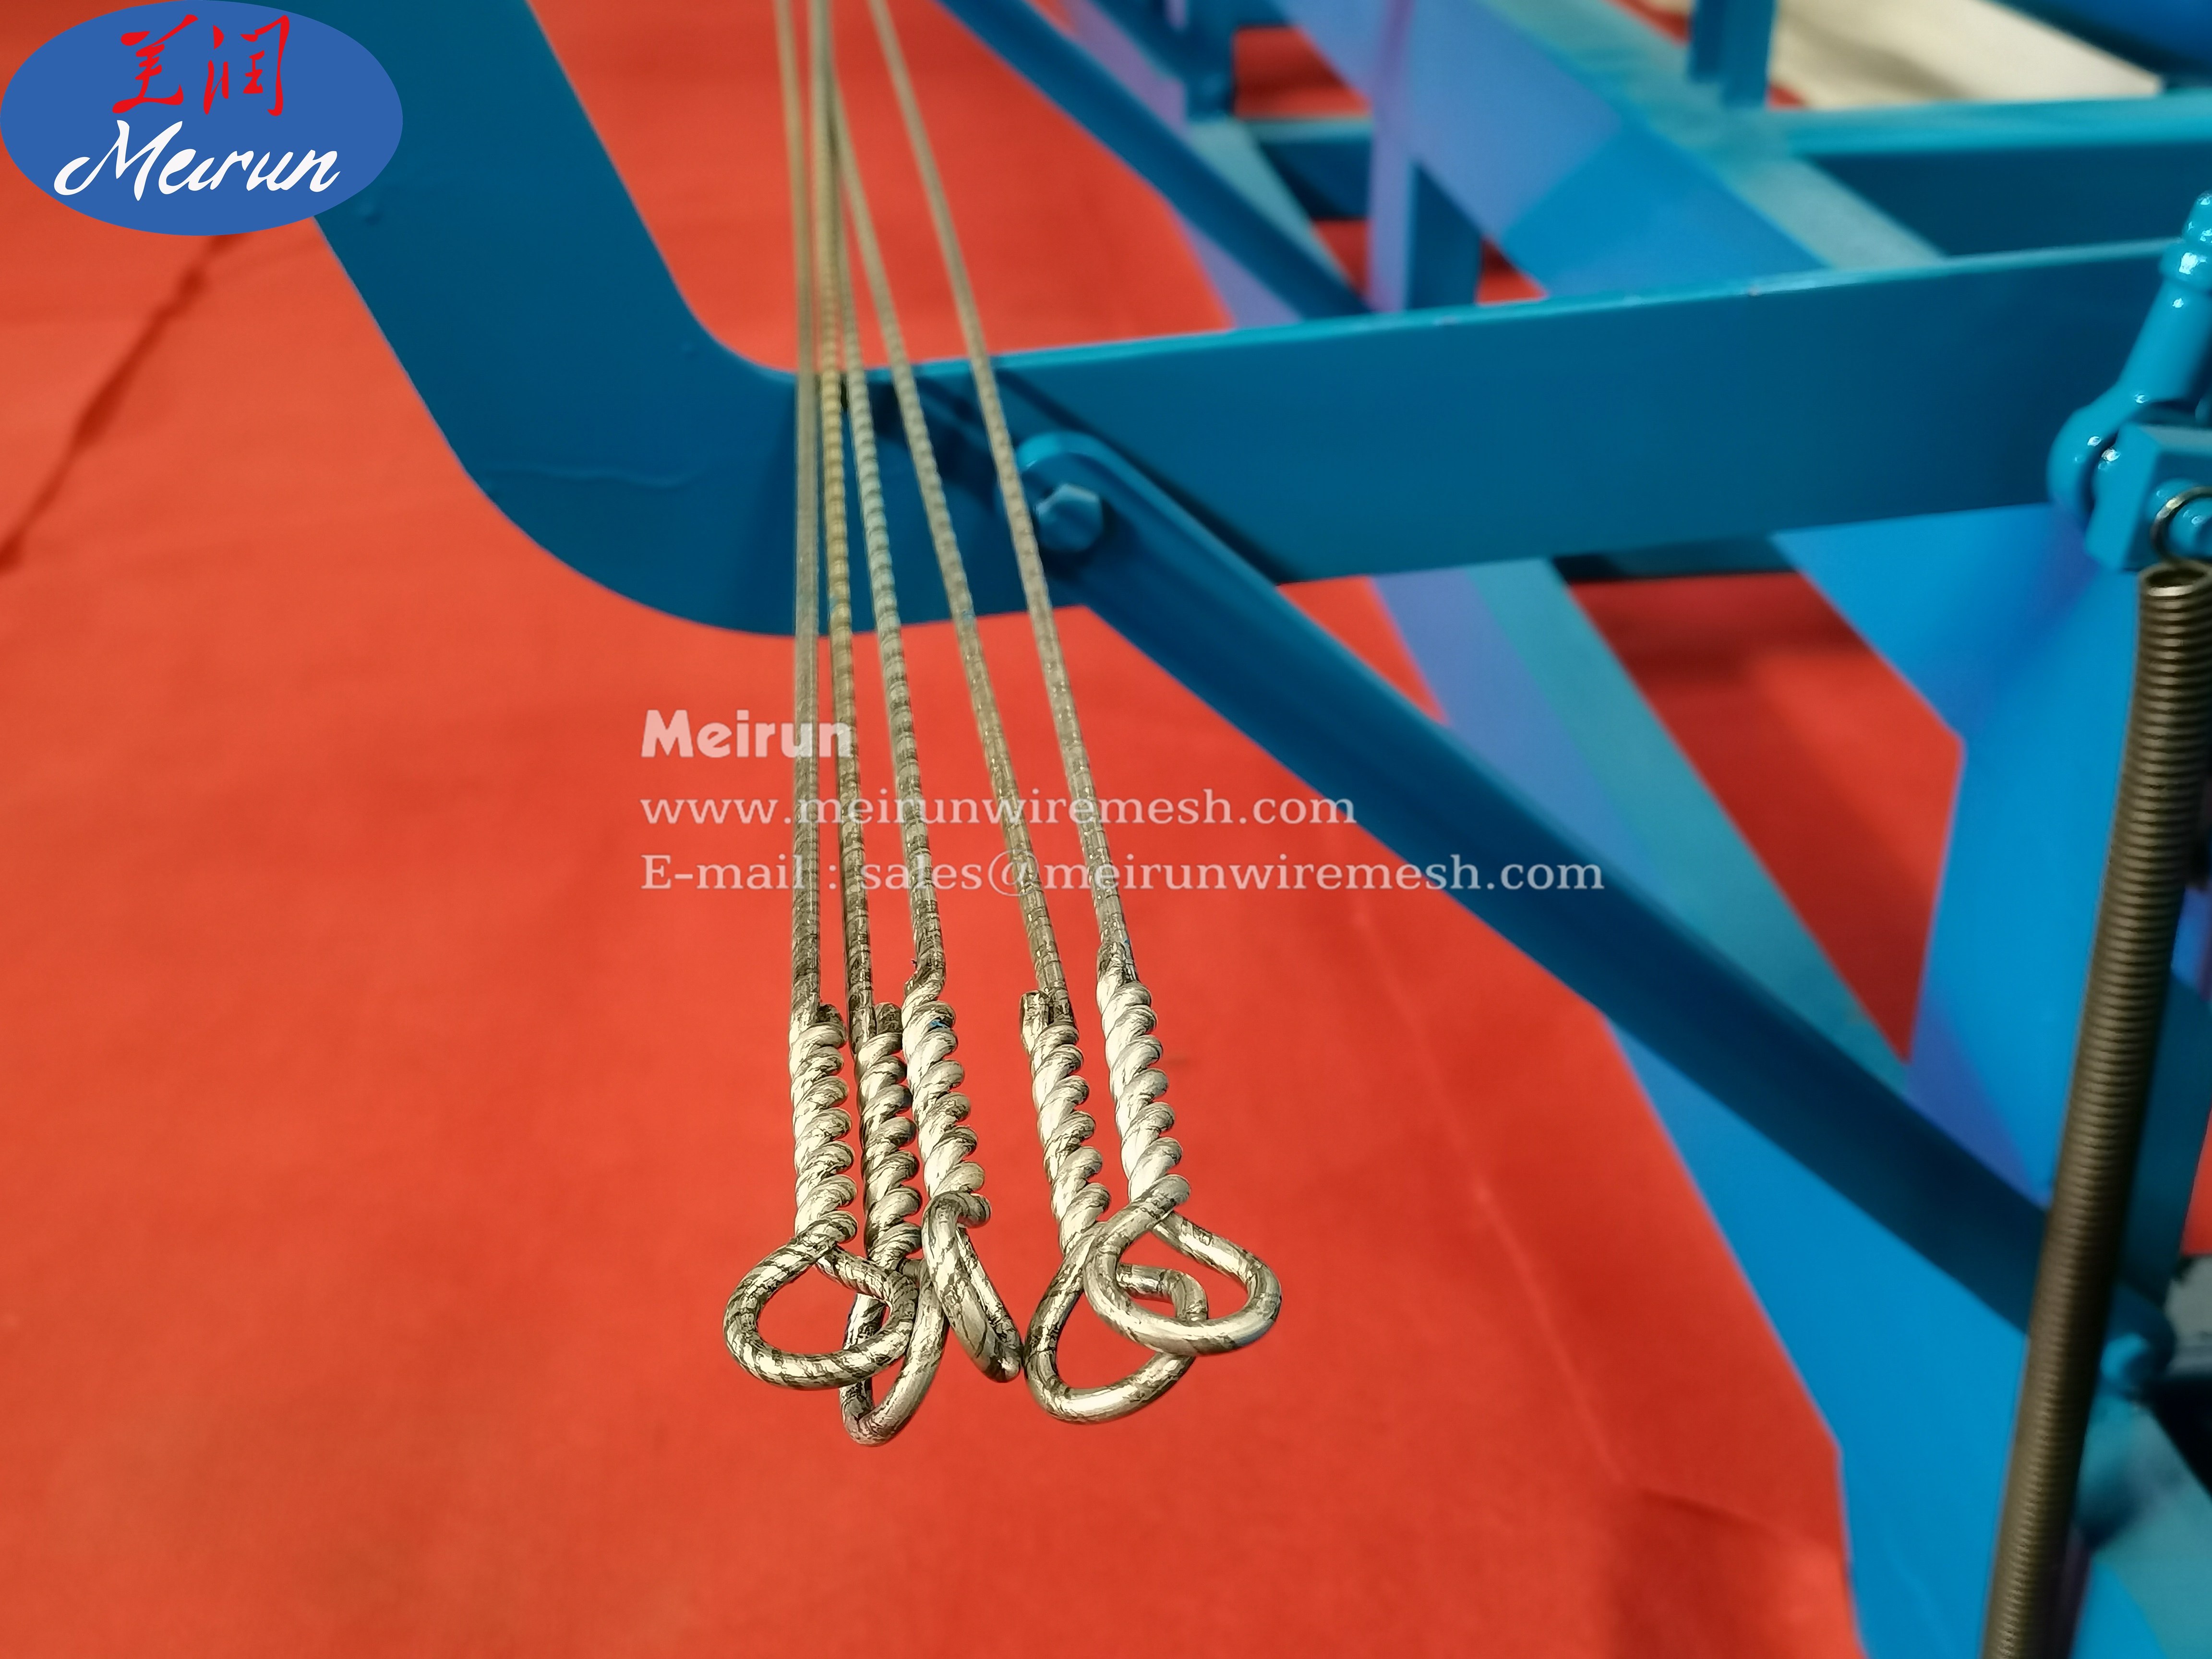 Single Loop Cotton Bale Wire Ties Making Machine